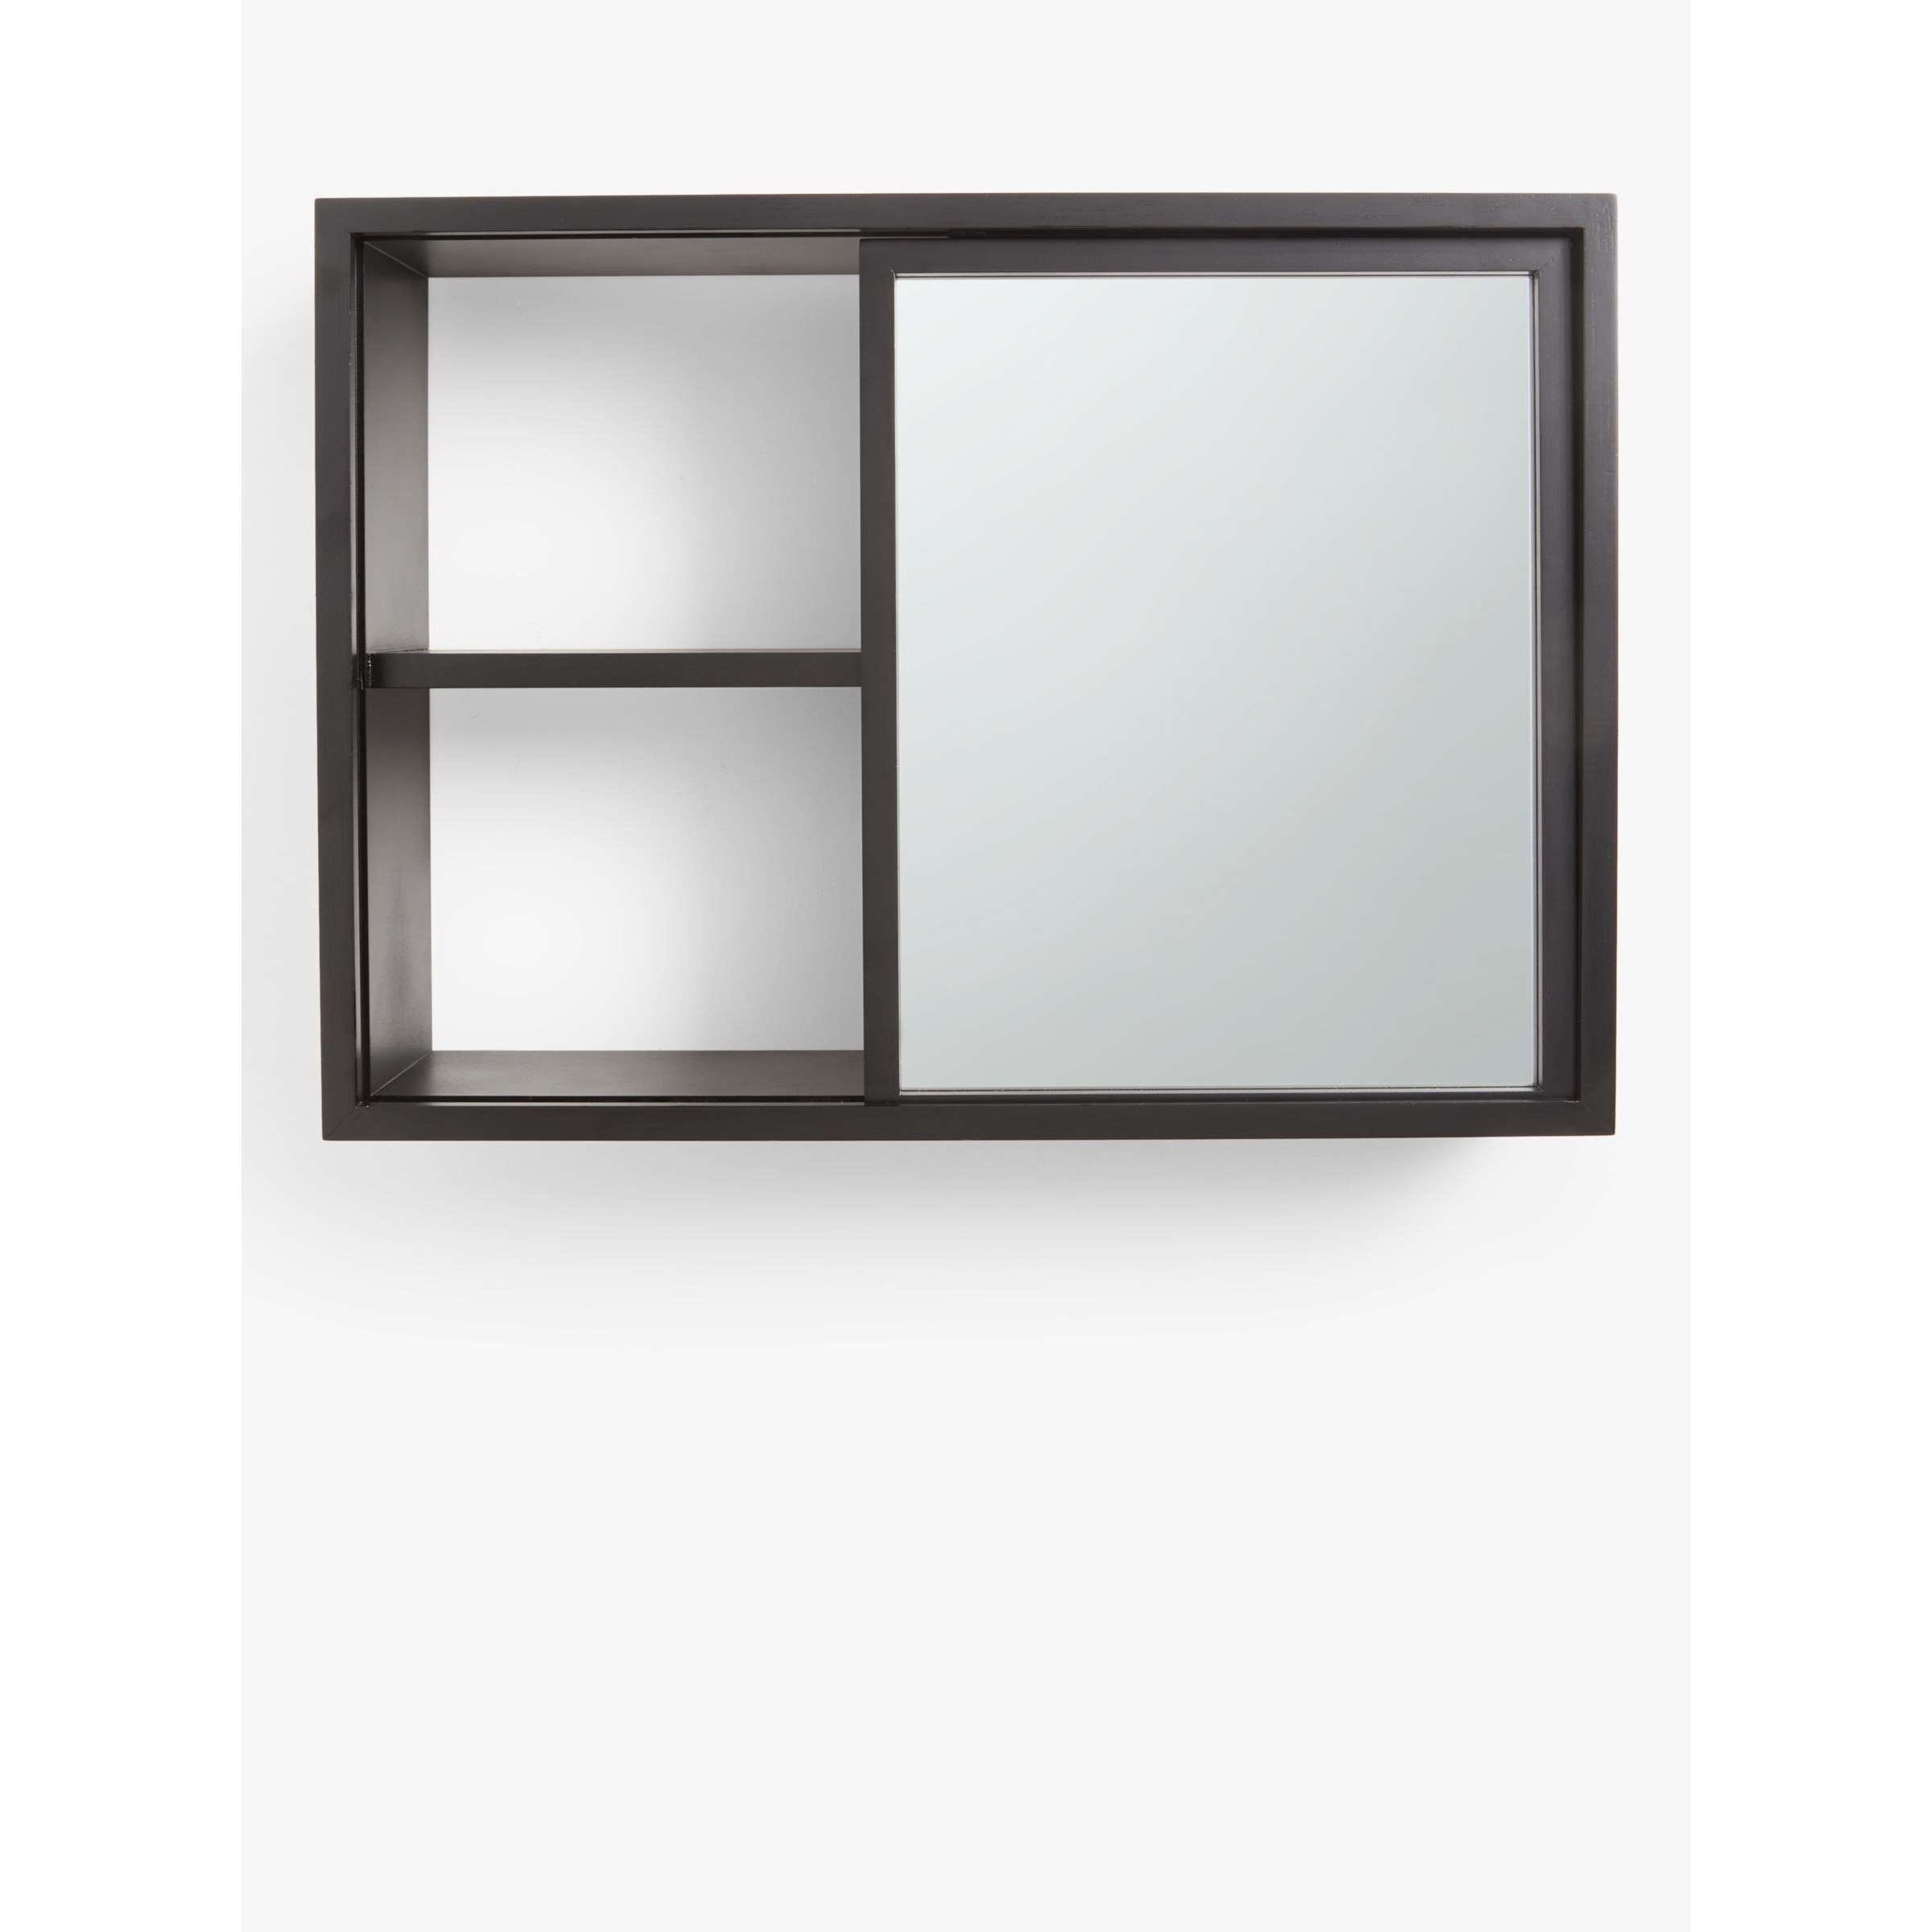 John Lewis Bathroom Mirror and Storage Shelf - image 1